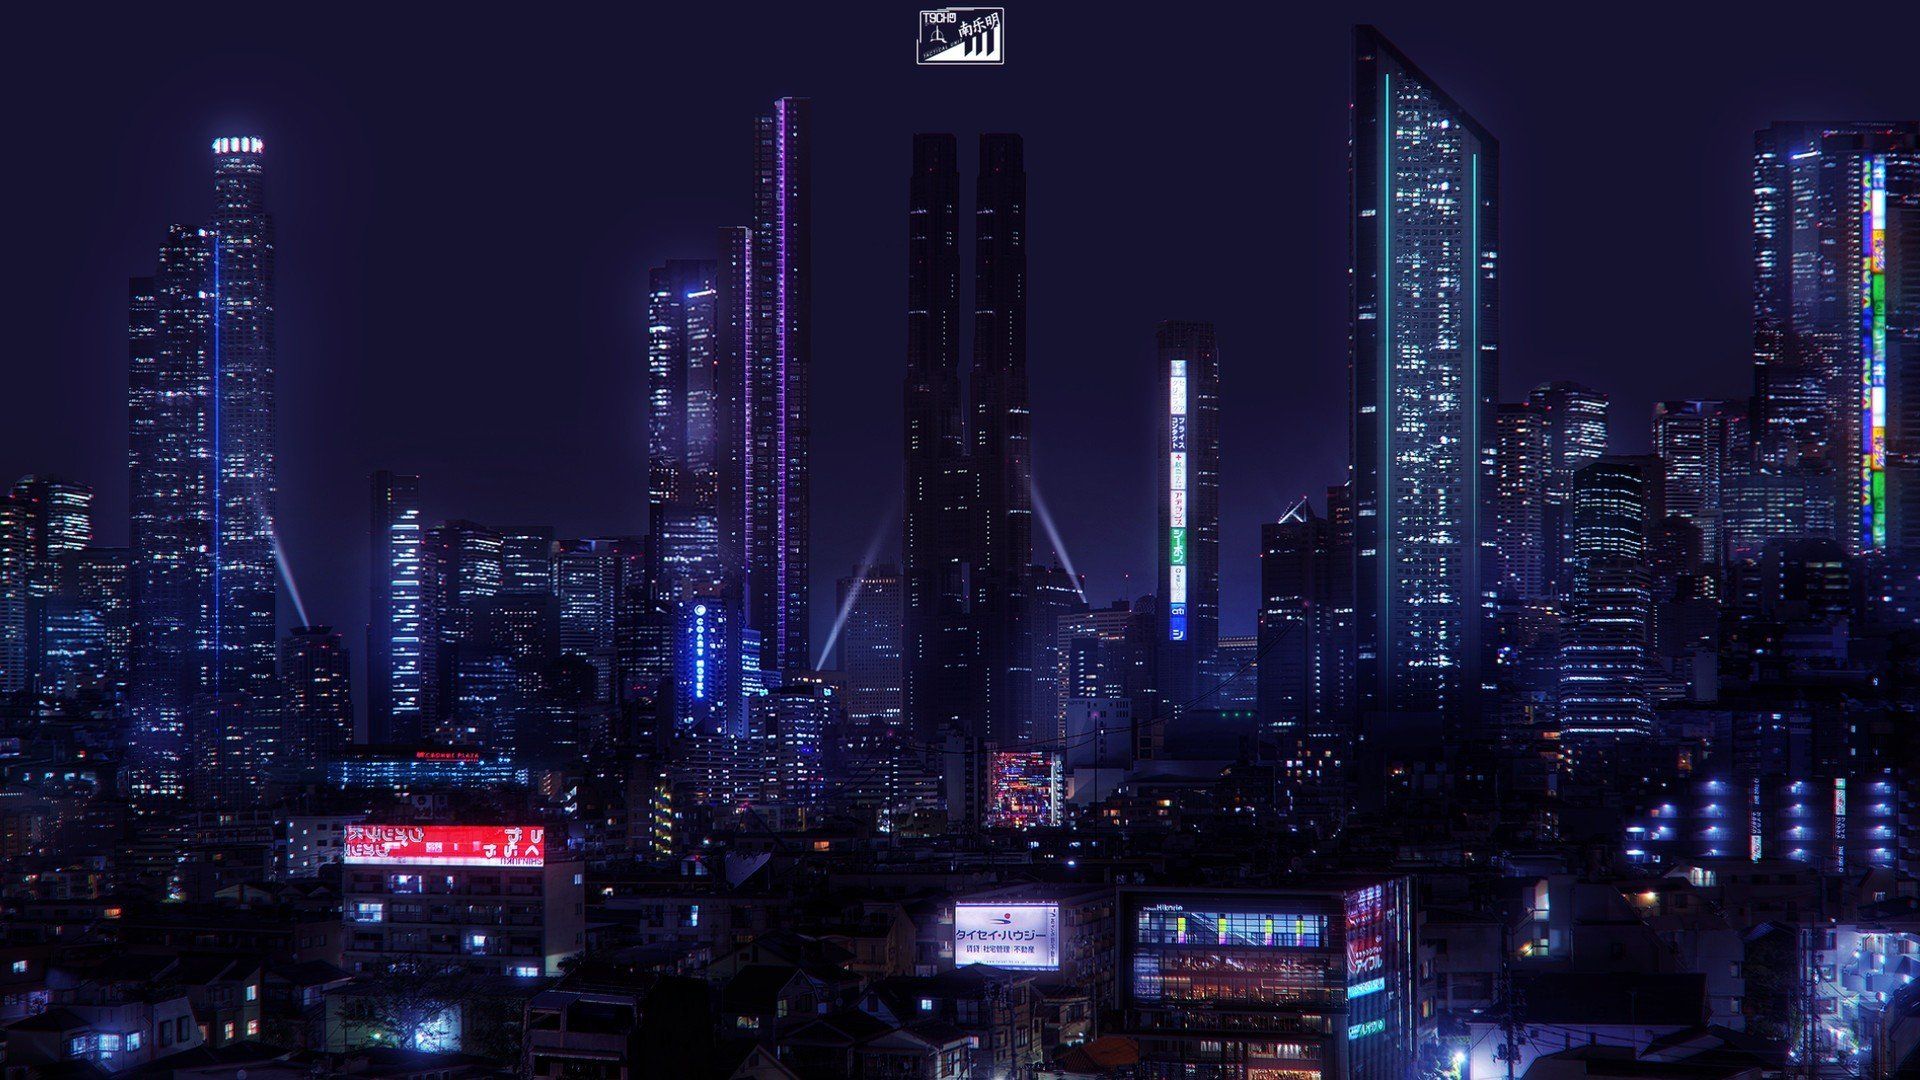 cyberpunk City Neon Wallpaper HD